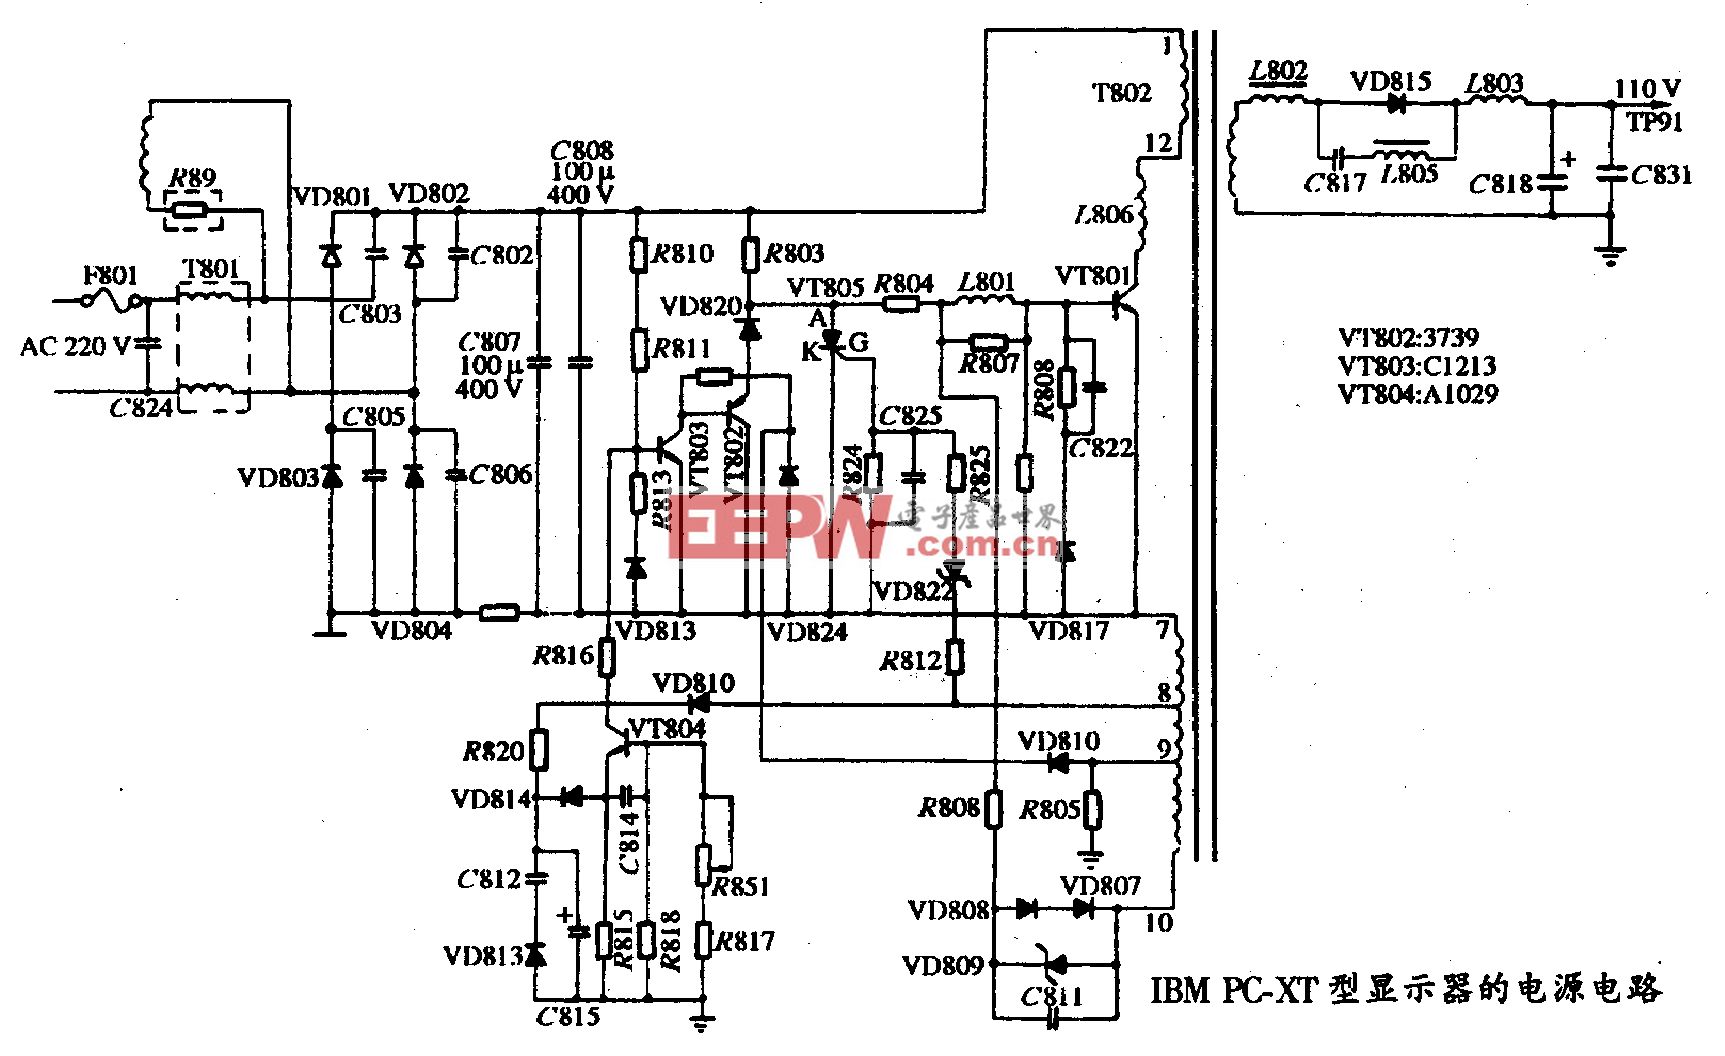 63、IBM PC-XT型显示器的电源电路图